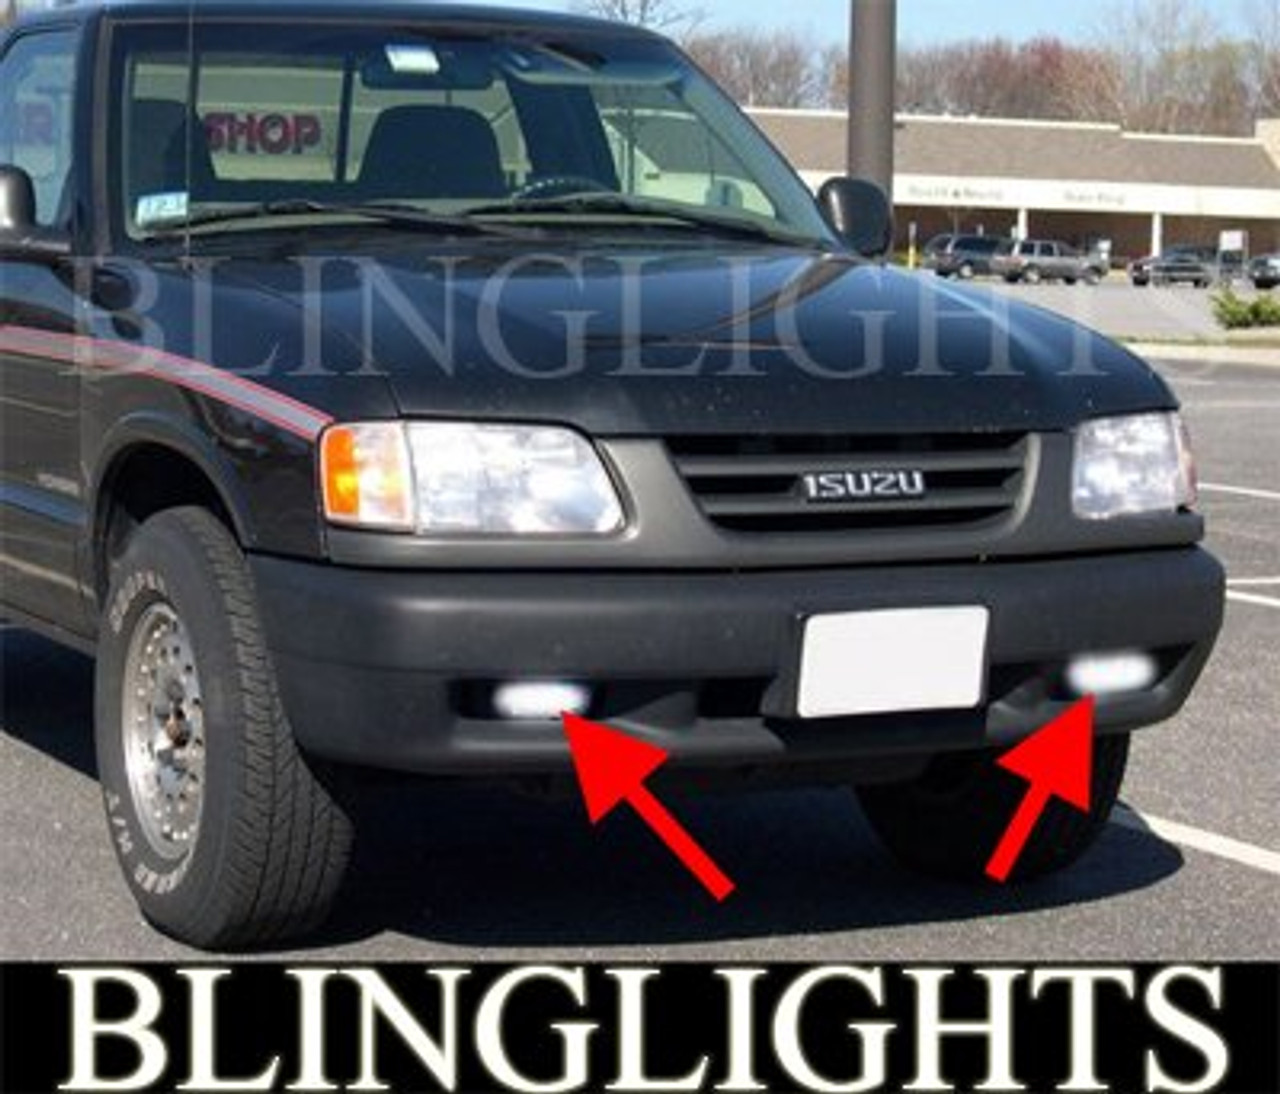 1996 1997 1998 1999 2000 Isuzu Hombre Xenon Fog Lamps Driving Lights  Foglamps Foglights Kit - BlingLights.com